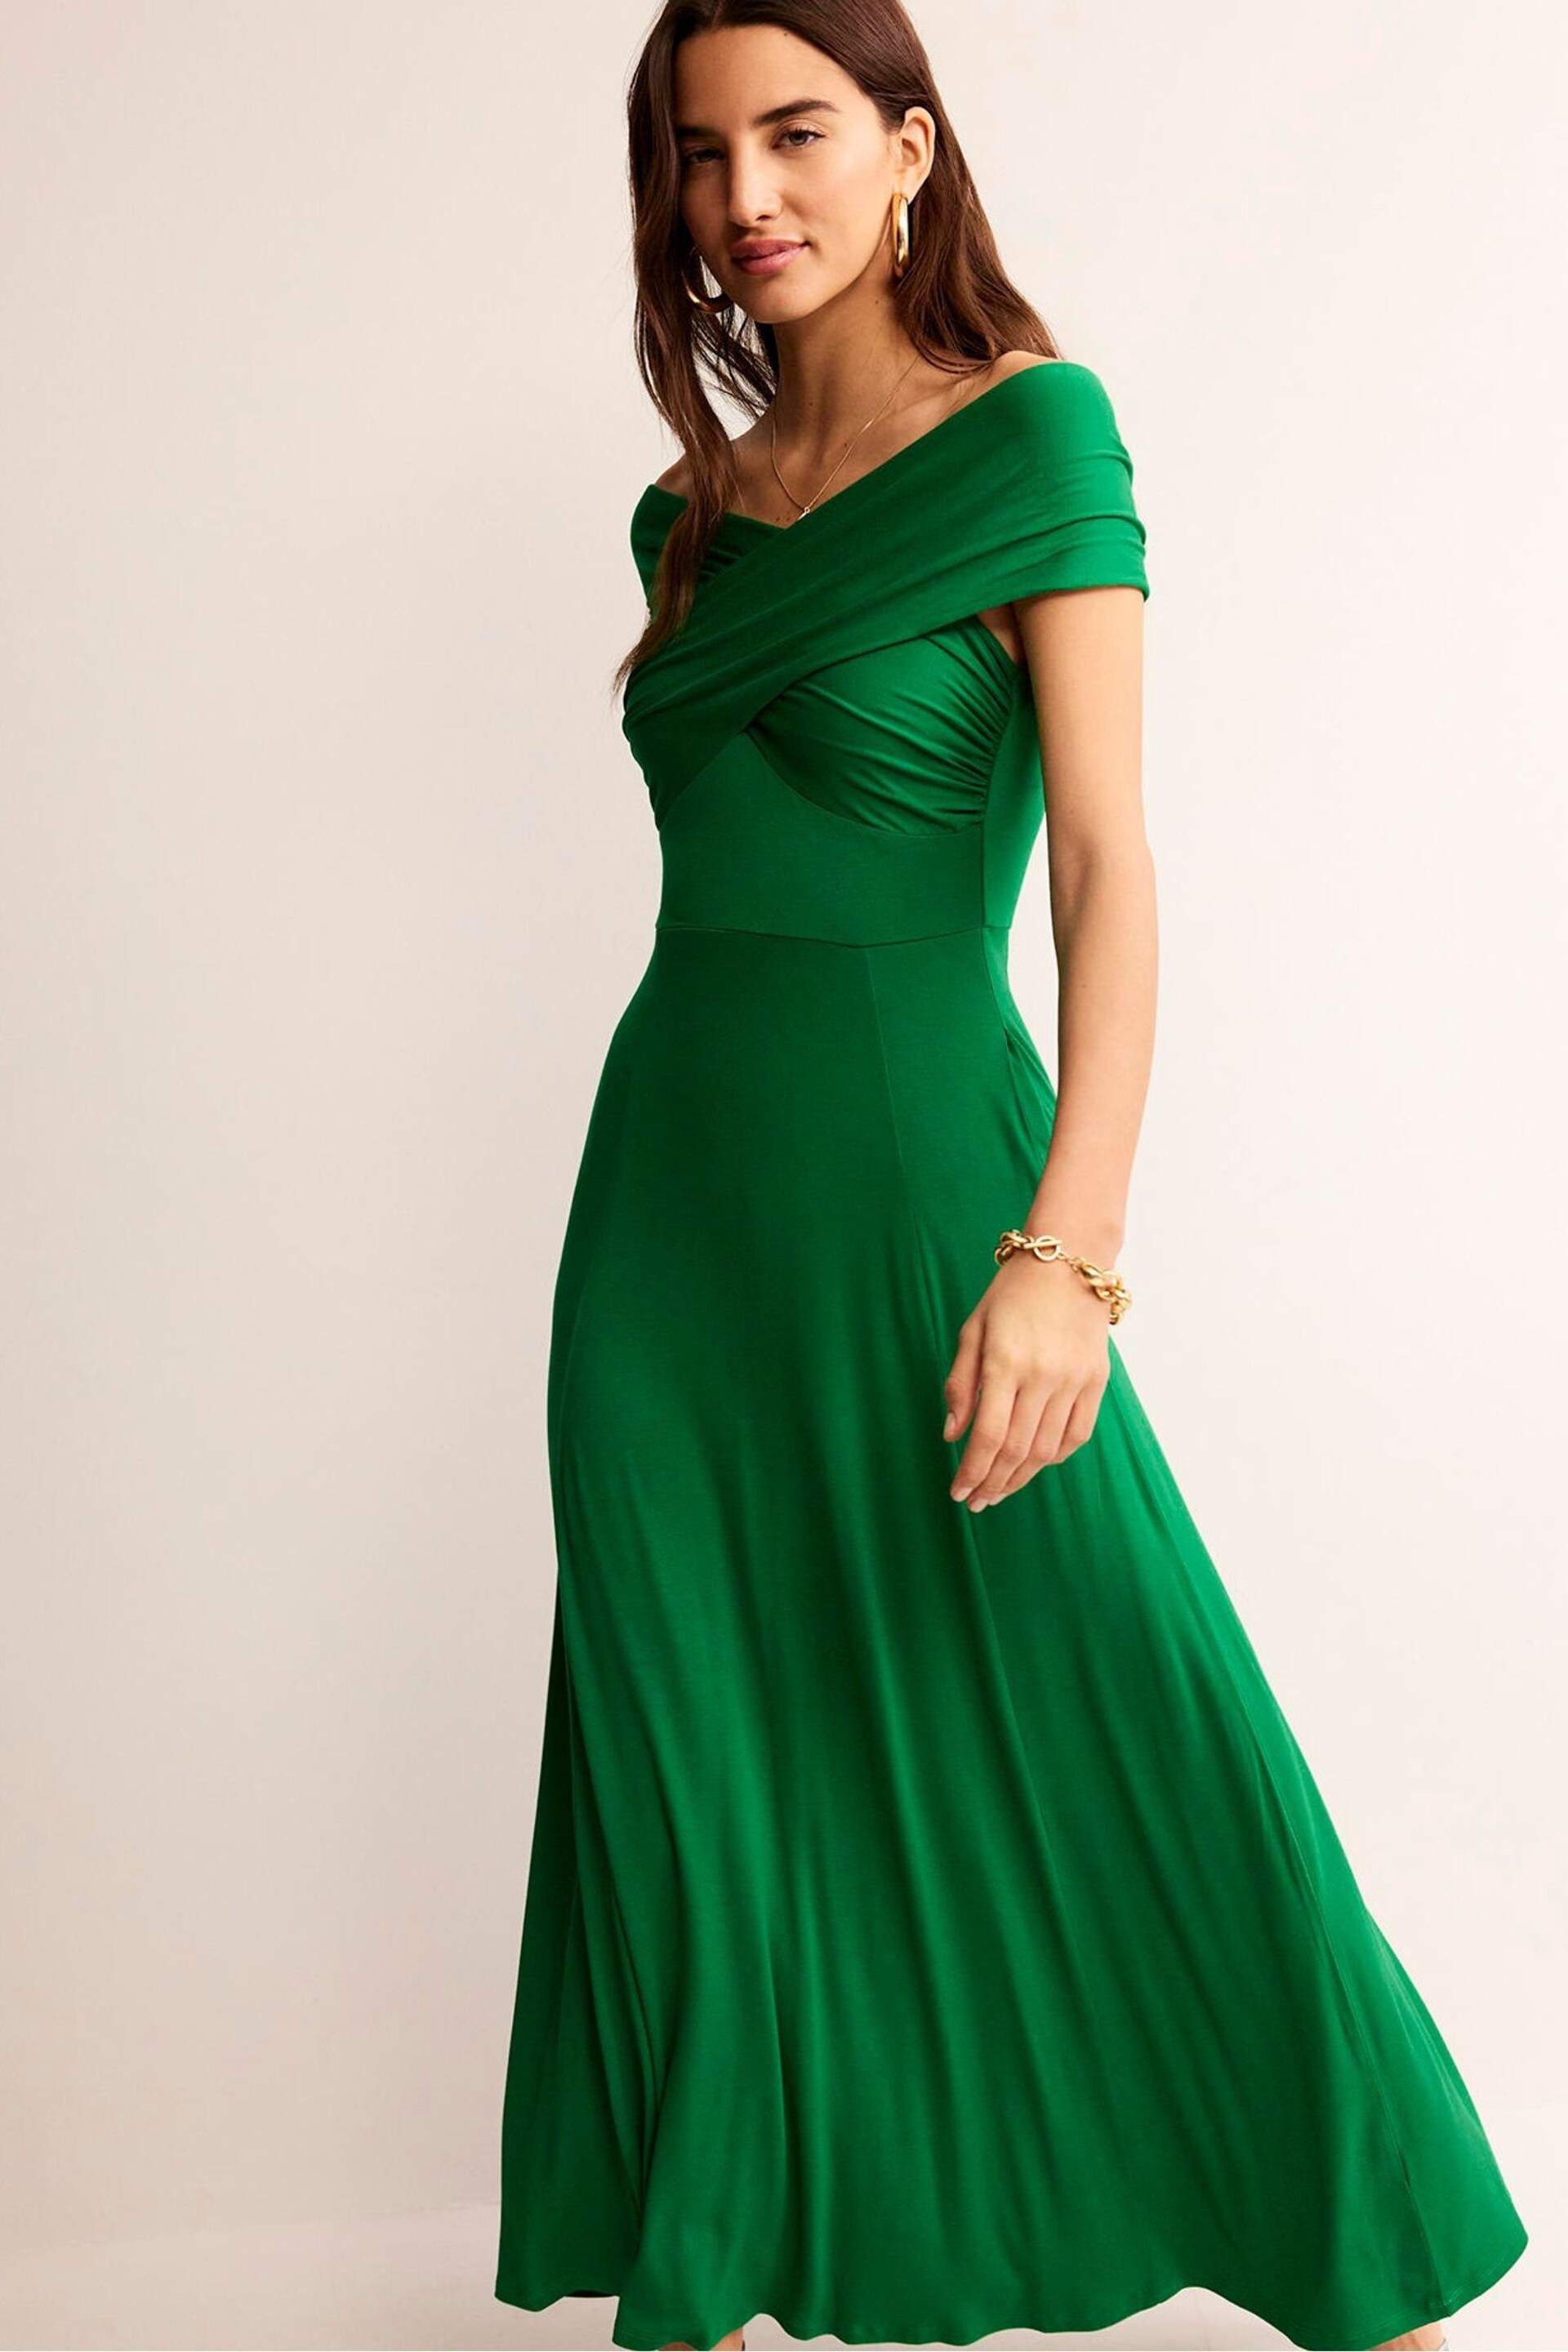 Boden Green Bardot Jersey Maxi Dress - Image 3 of 5